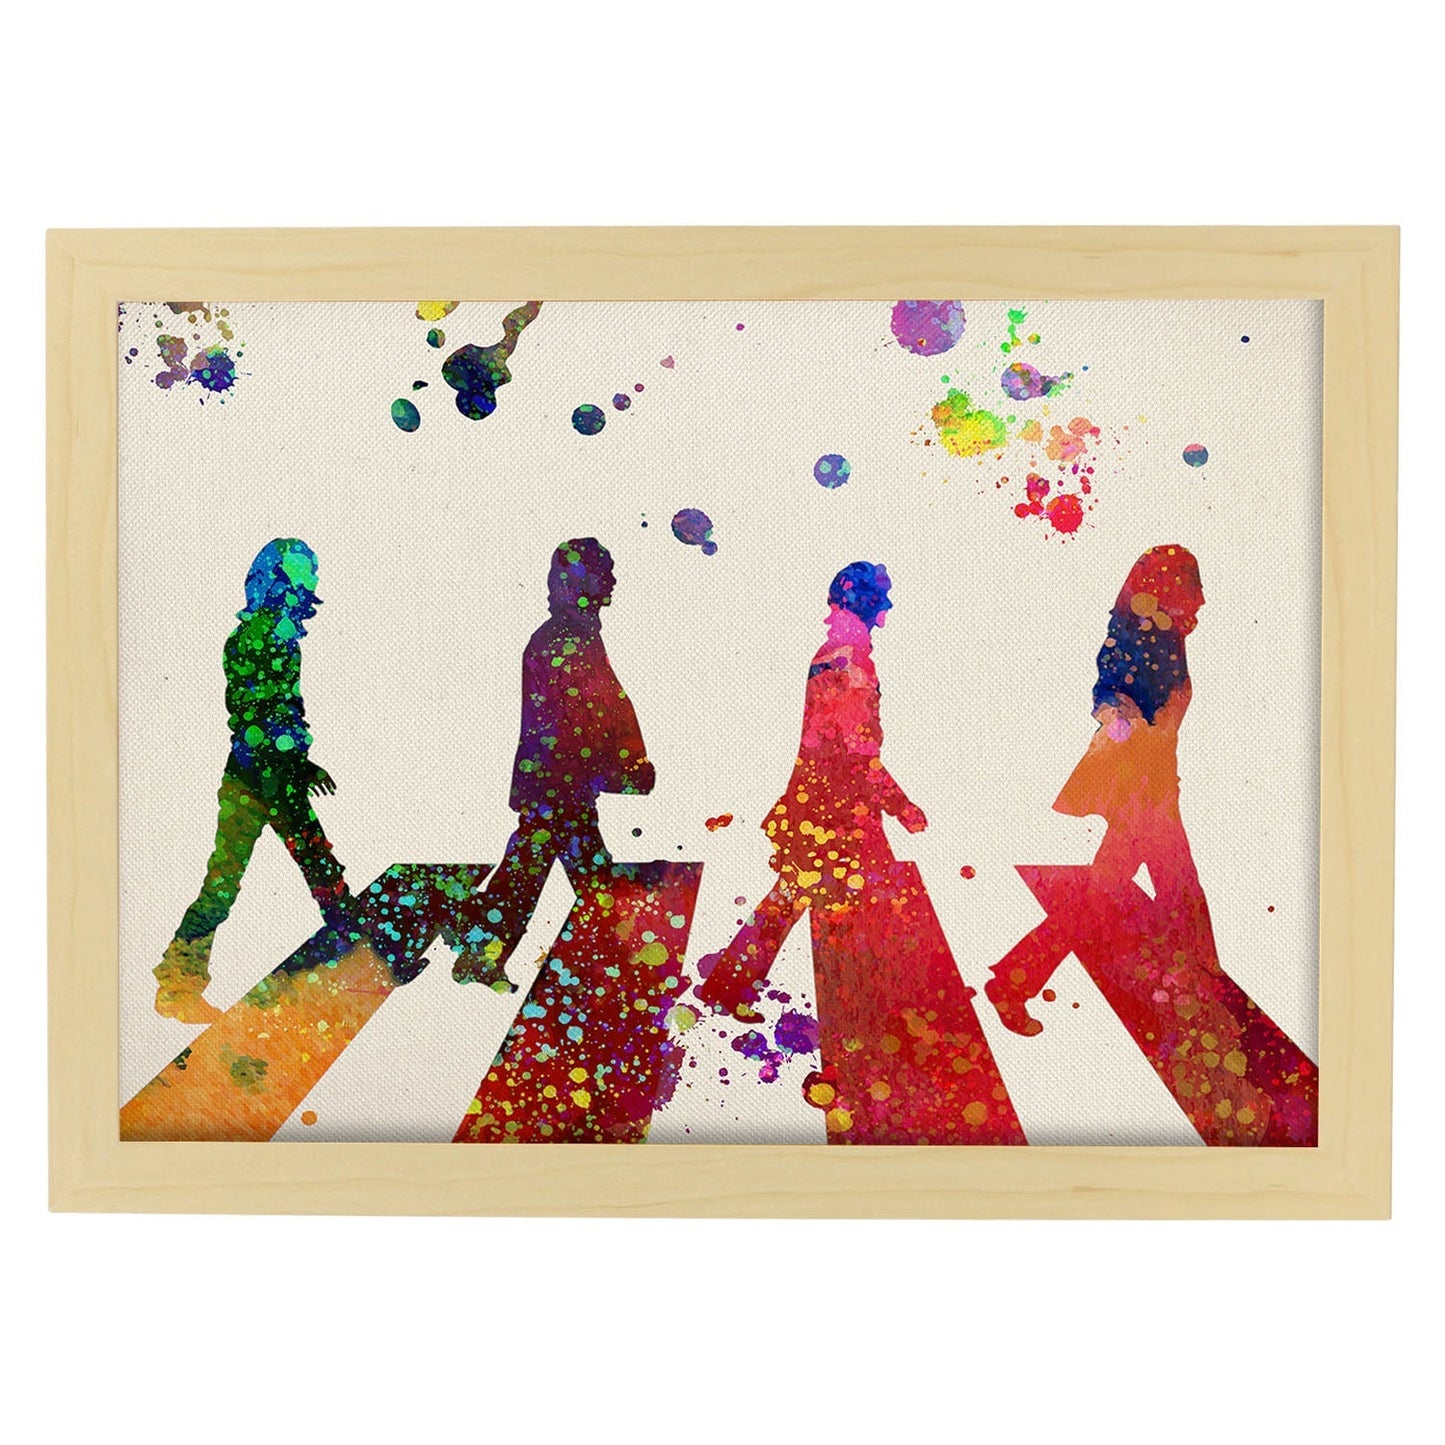 Lámina de la banda de música The Beatles (paso de cebra) en . Poster estilo explosión de color. Lámina de papel 250 gr.-Artwork-Nacnic-A3-Marco Madera clara-Nacnic Estudio SL